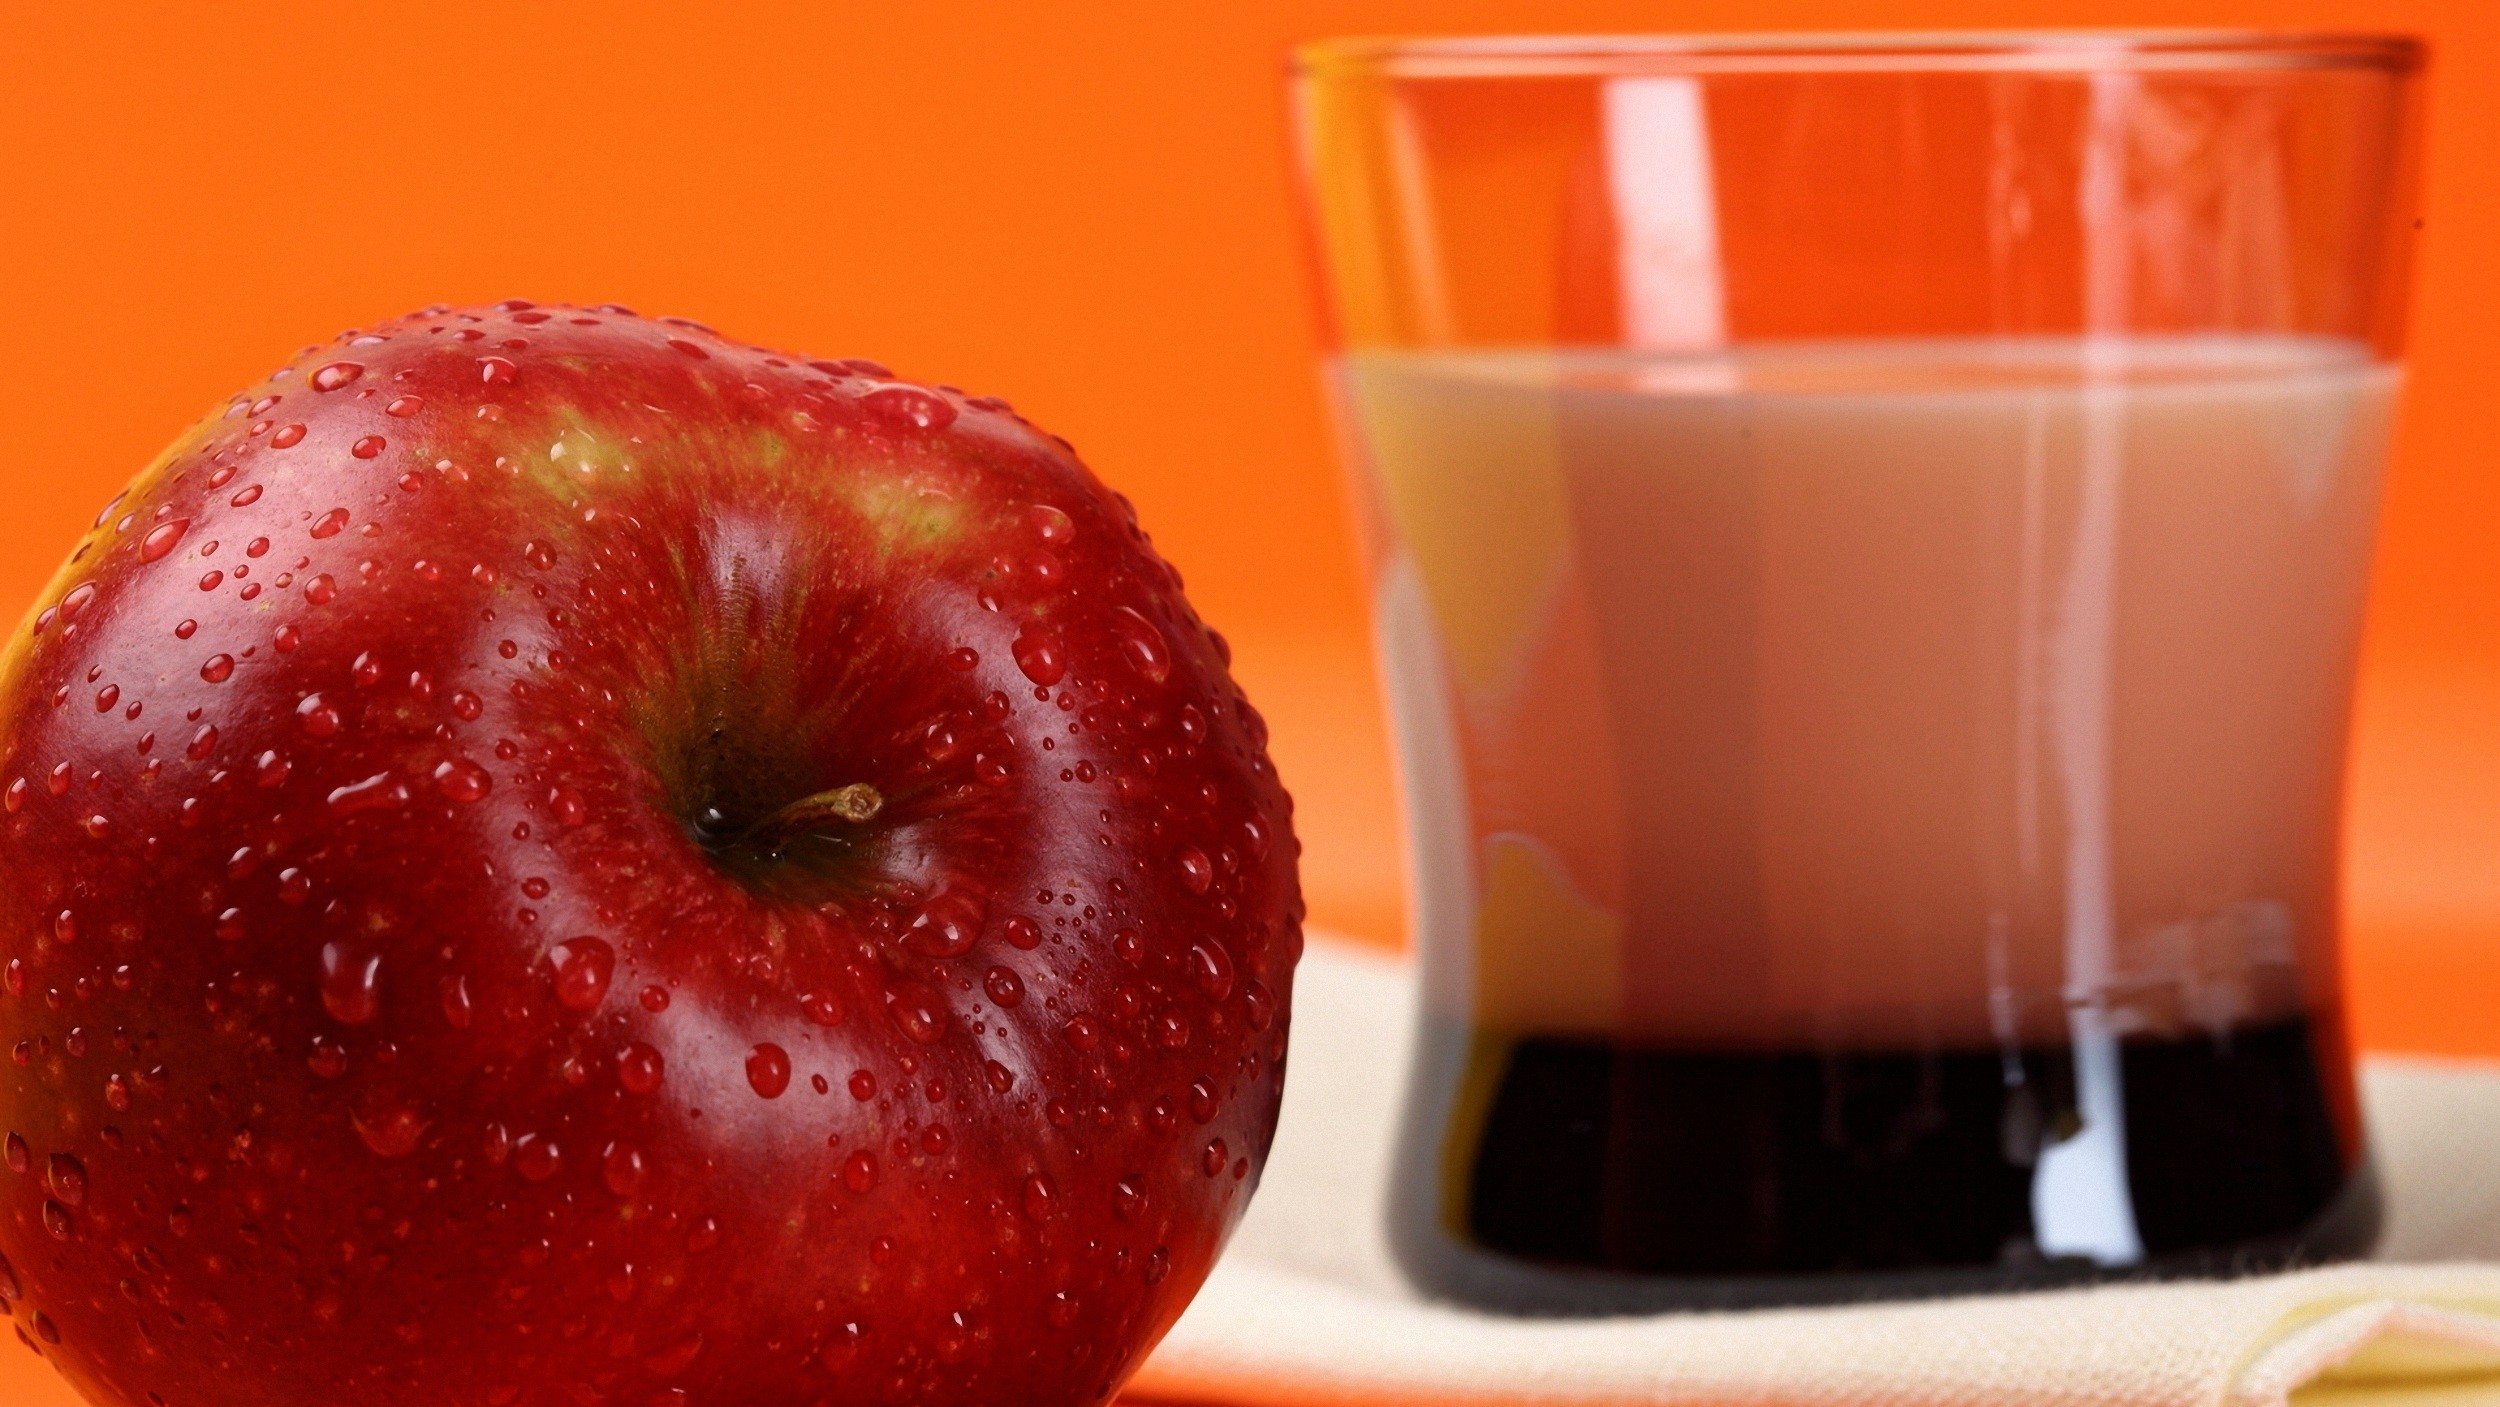 General 2500x1407 apples fruit food water drops orange background drinking glass closeup